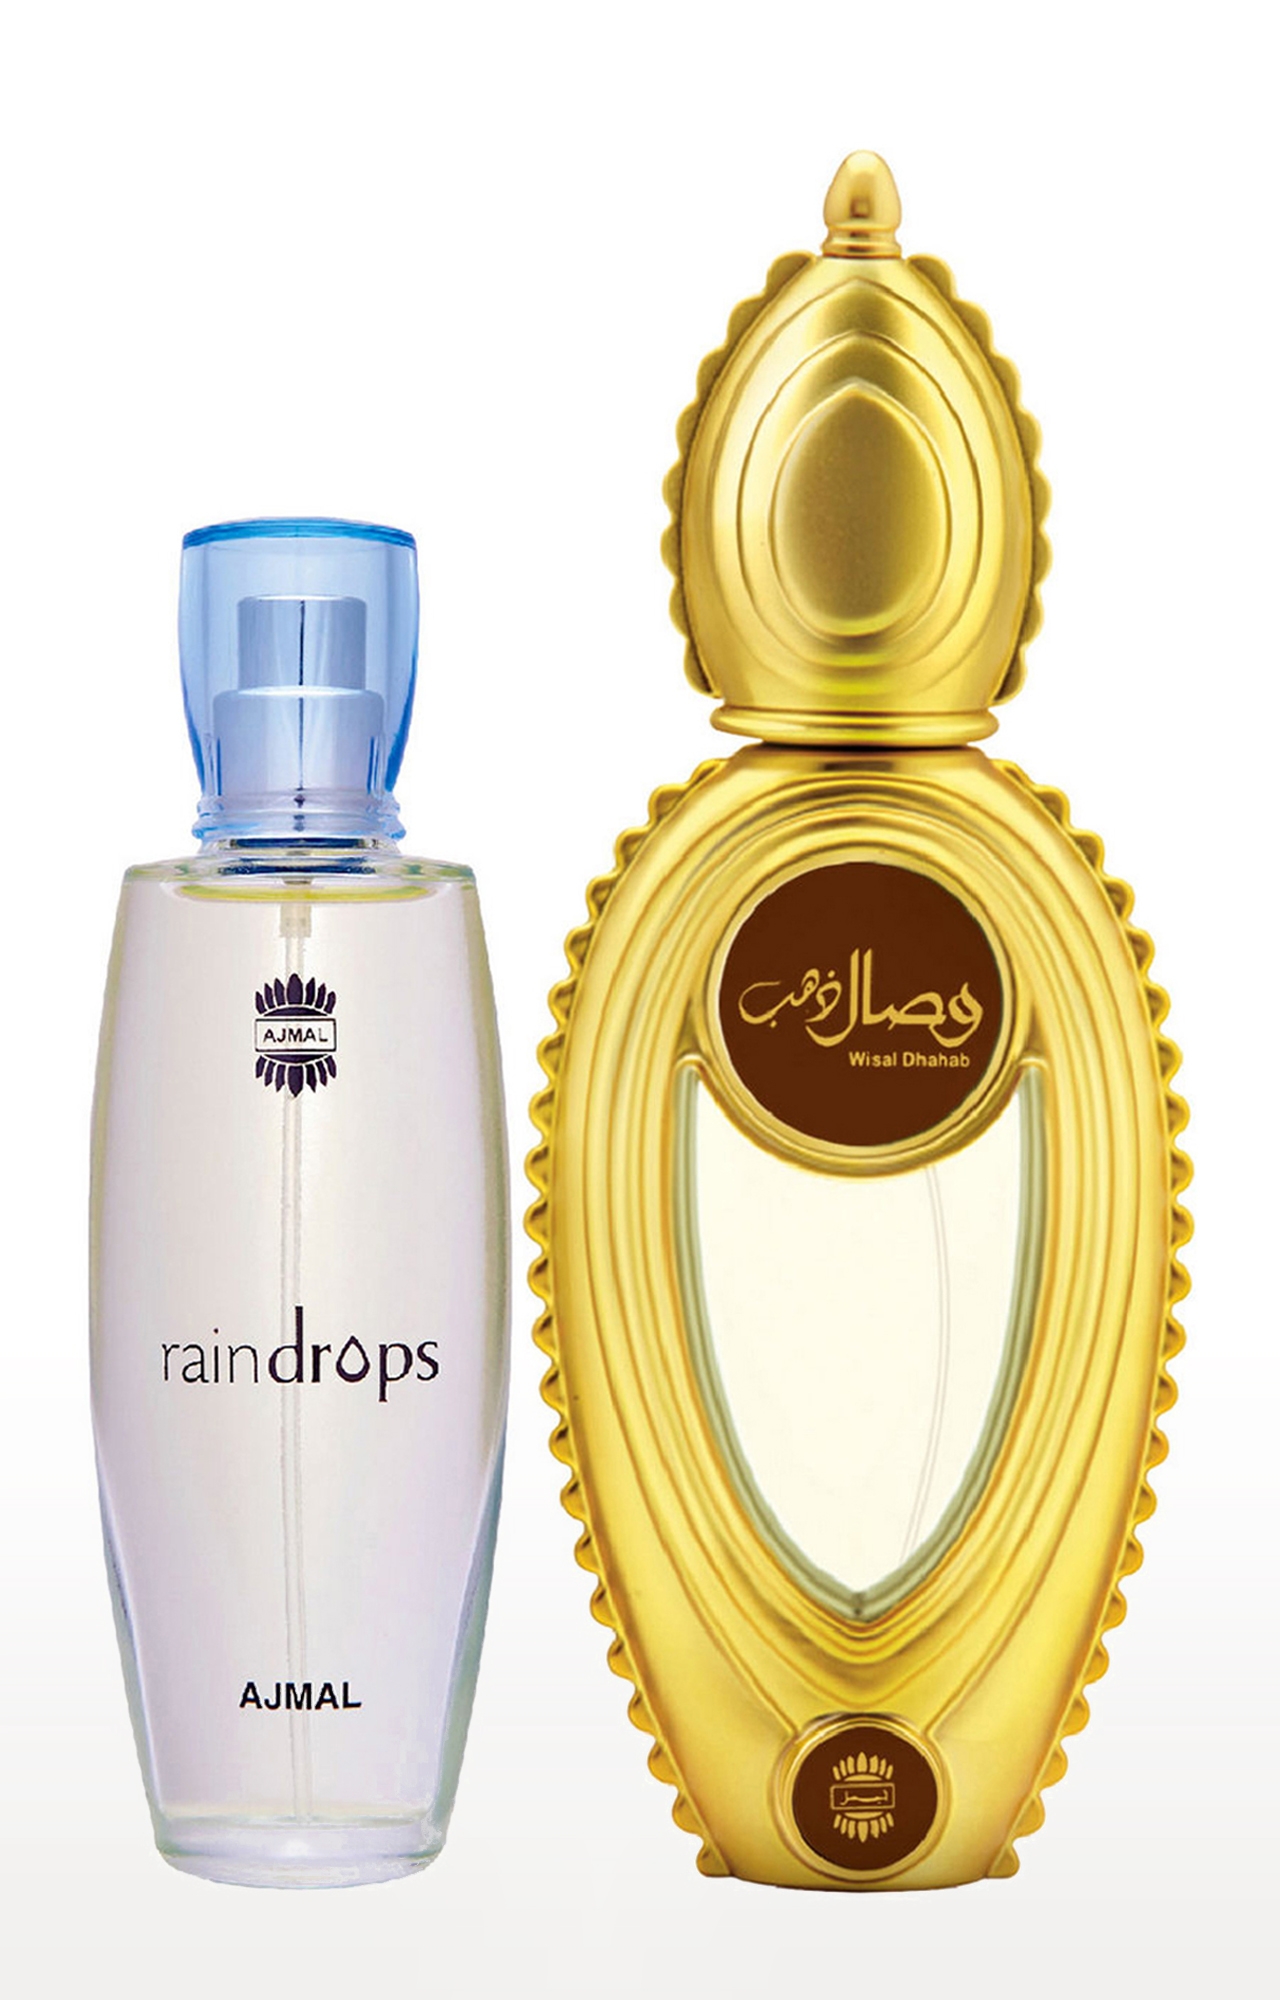 Ajmal Raindrops EDP Perfume 50ml for Women and Wisal Dhahab EDP Fruity Perfume 50ml for Men